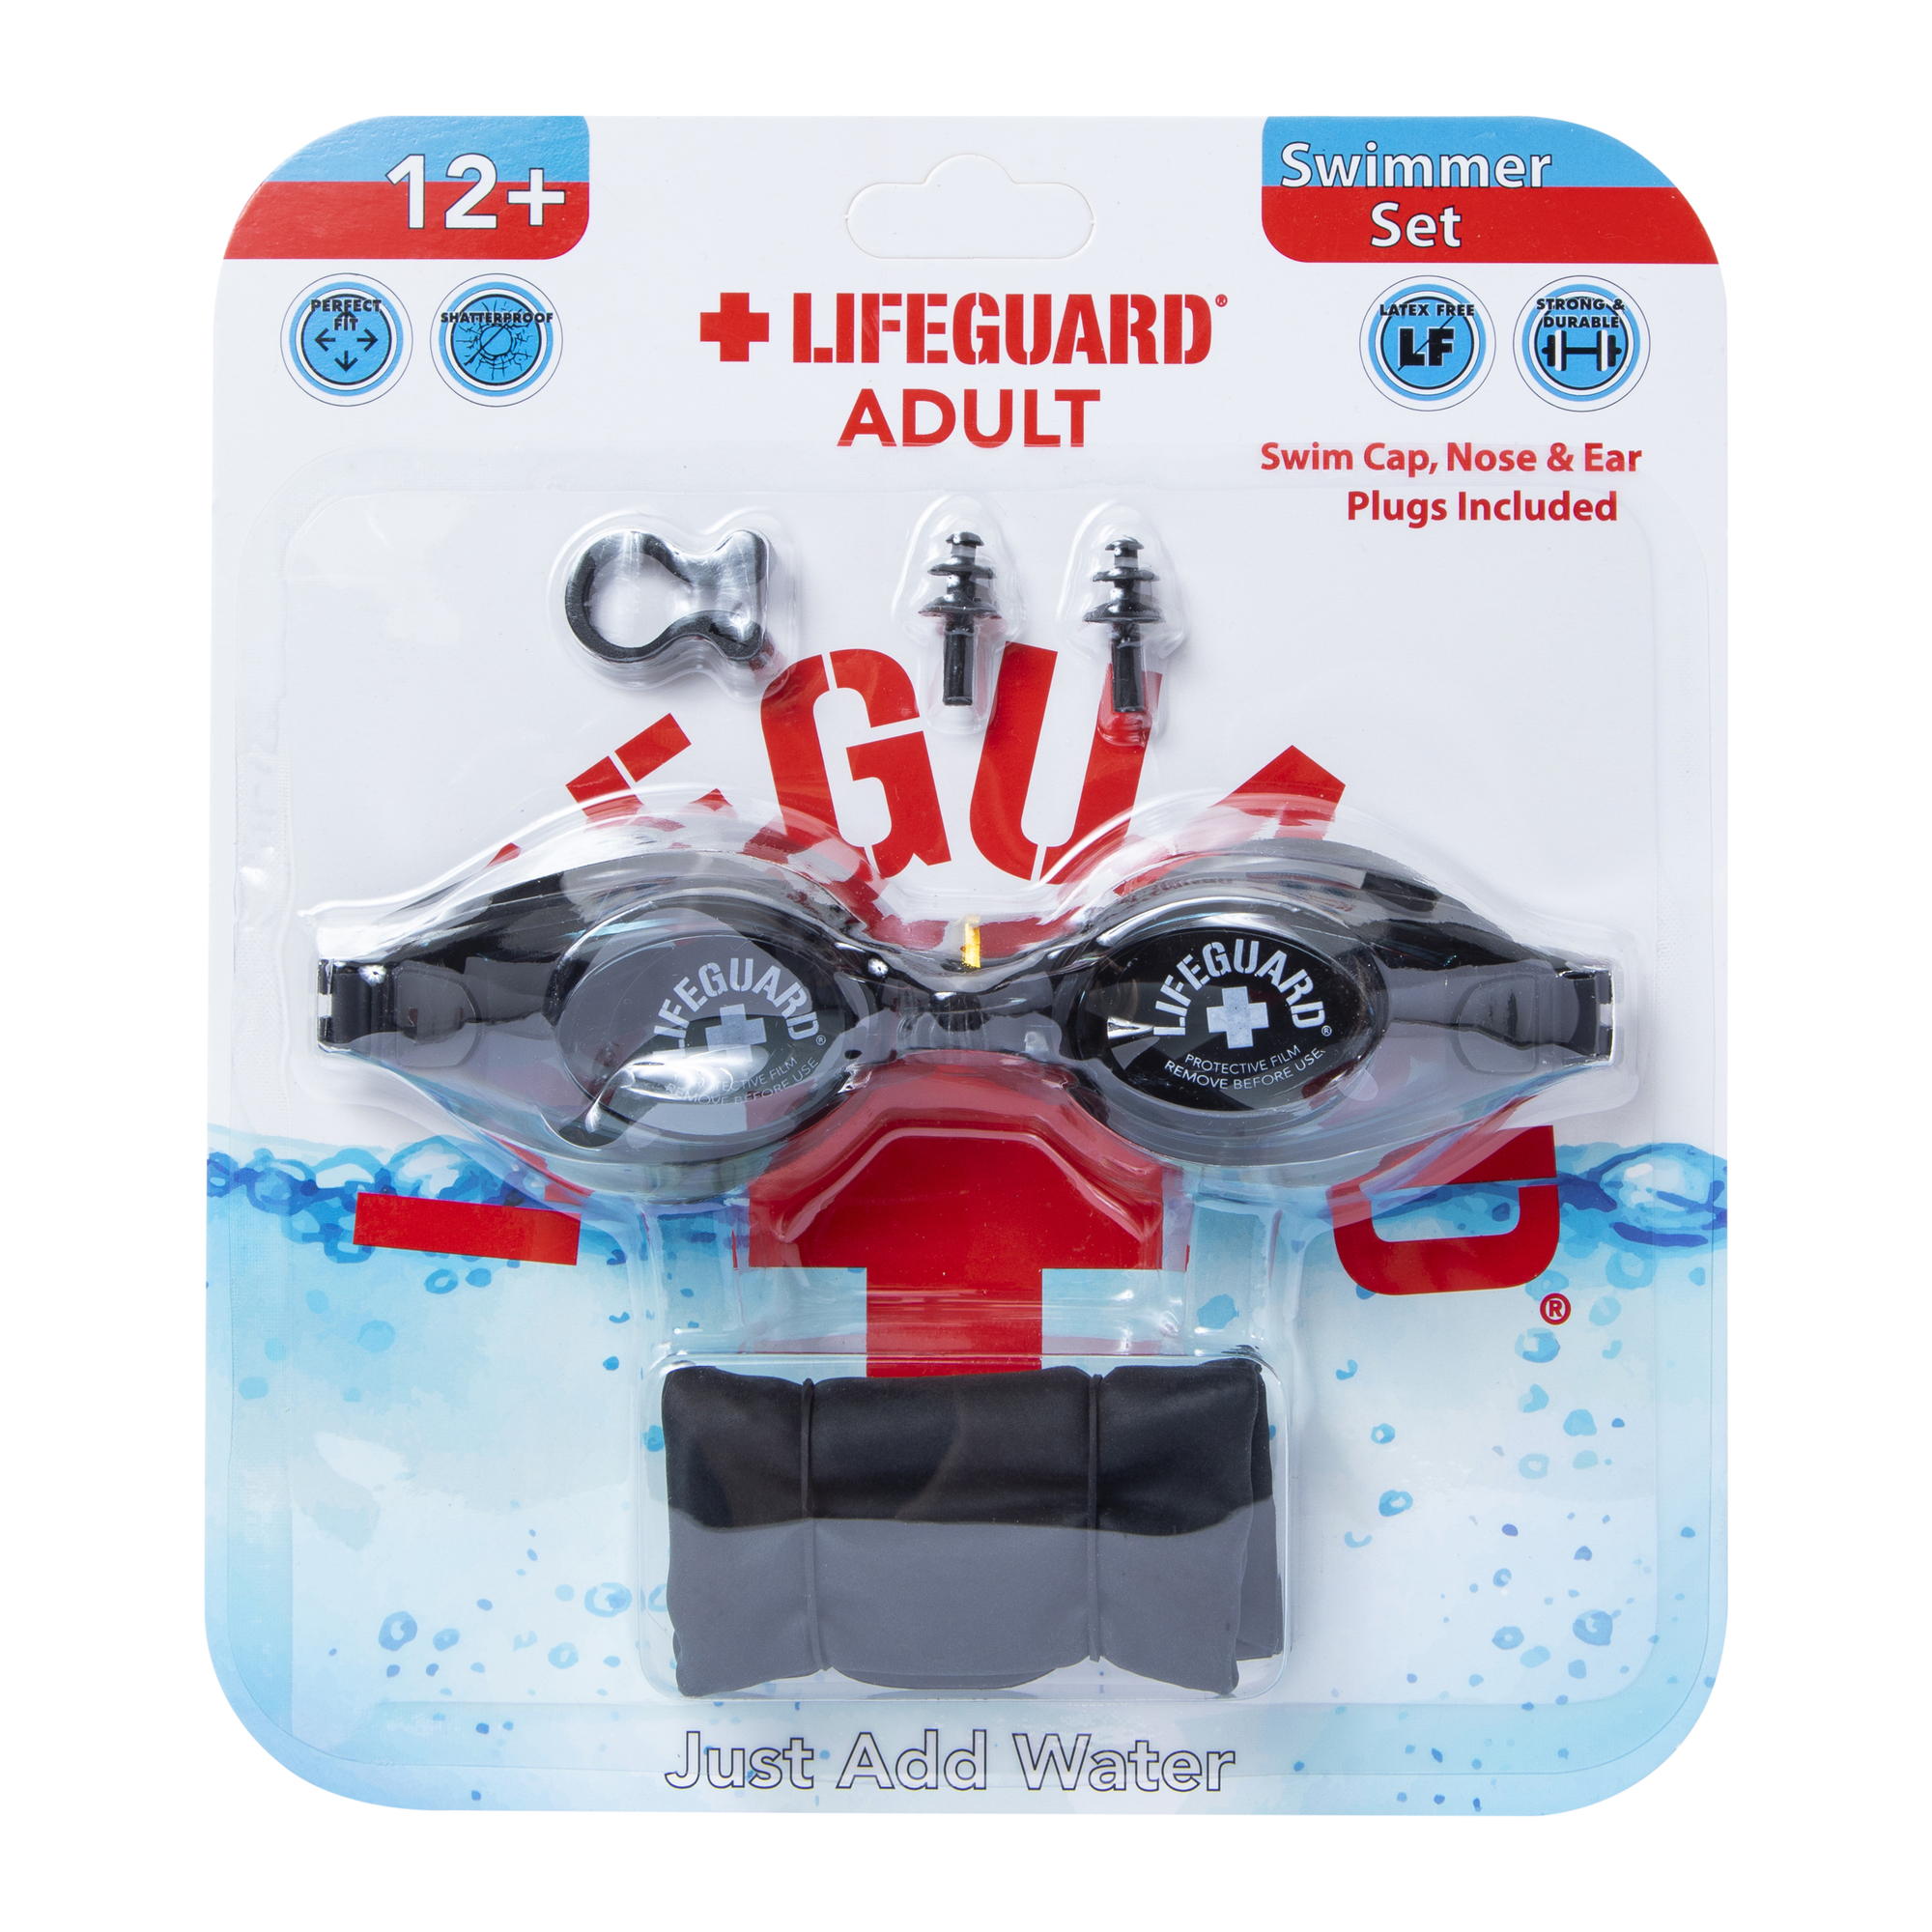 lifeguard® adult swimmer 4-piece set